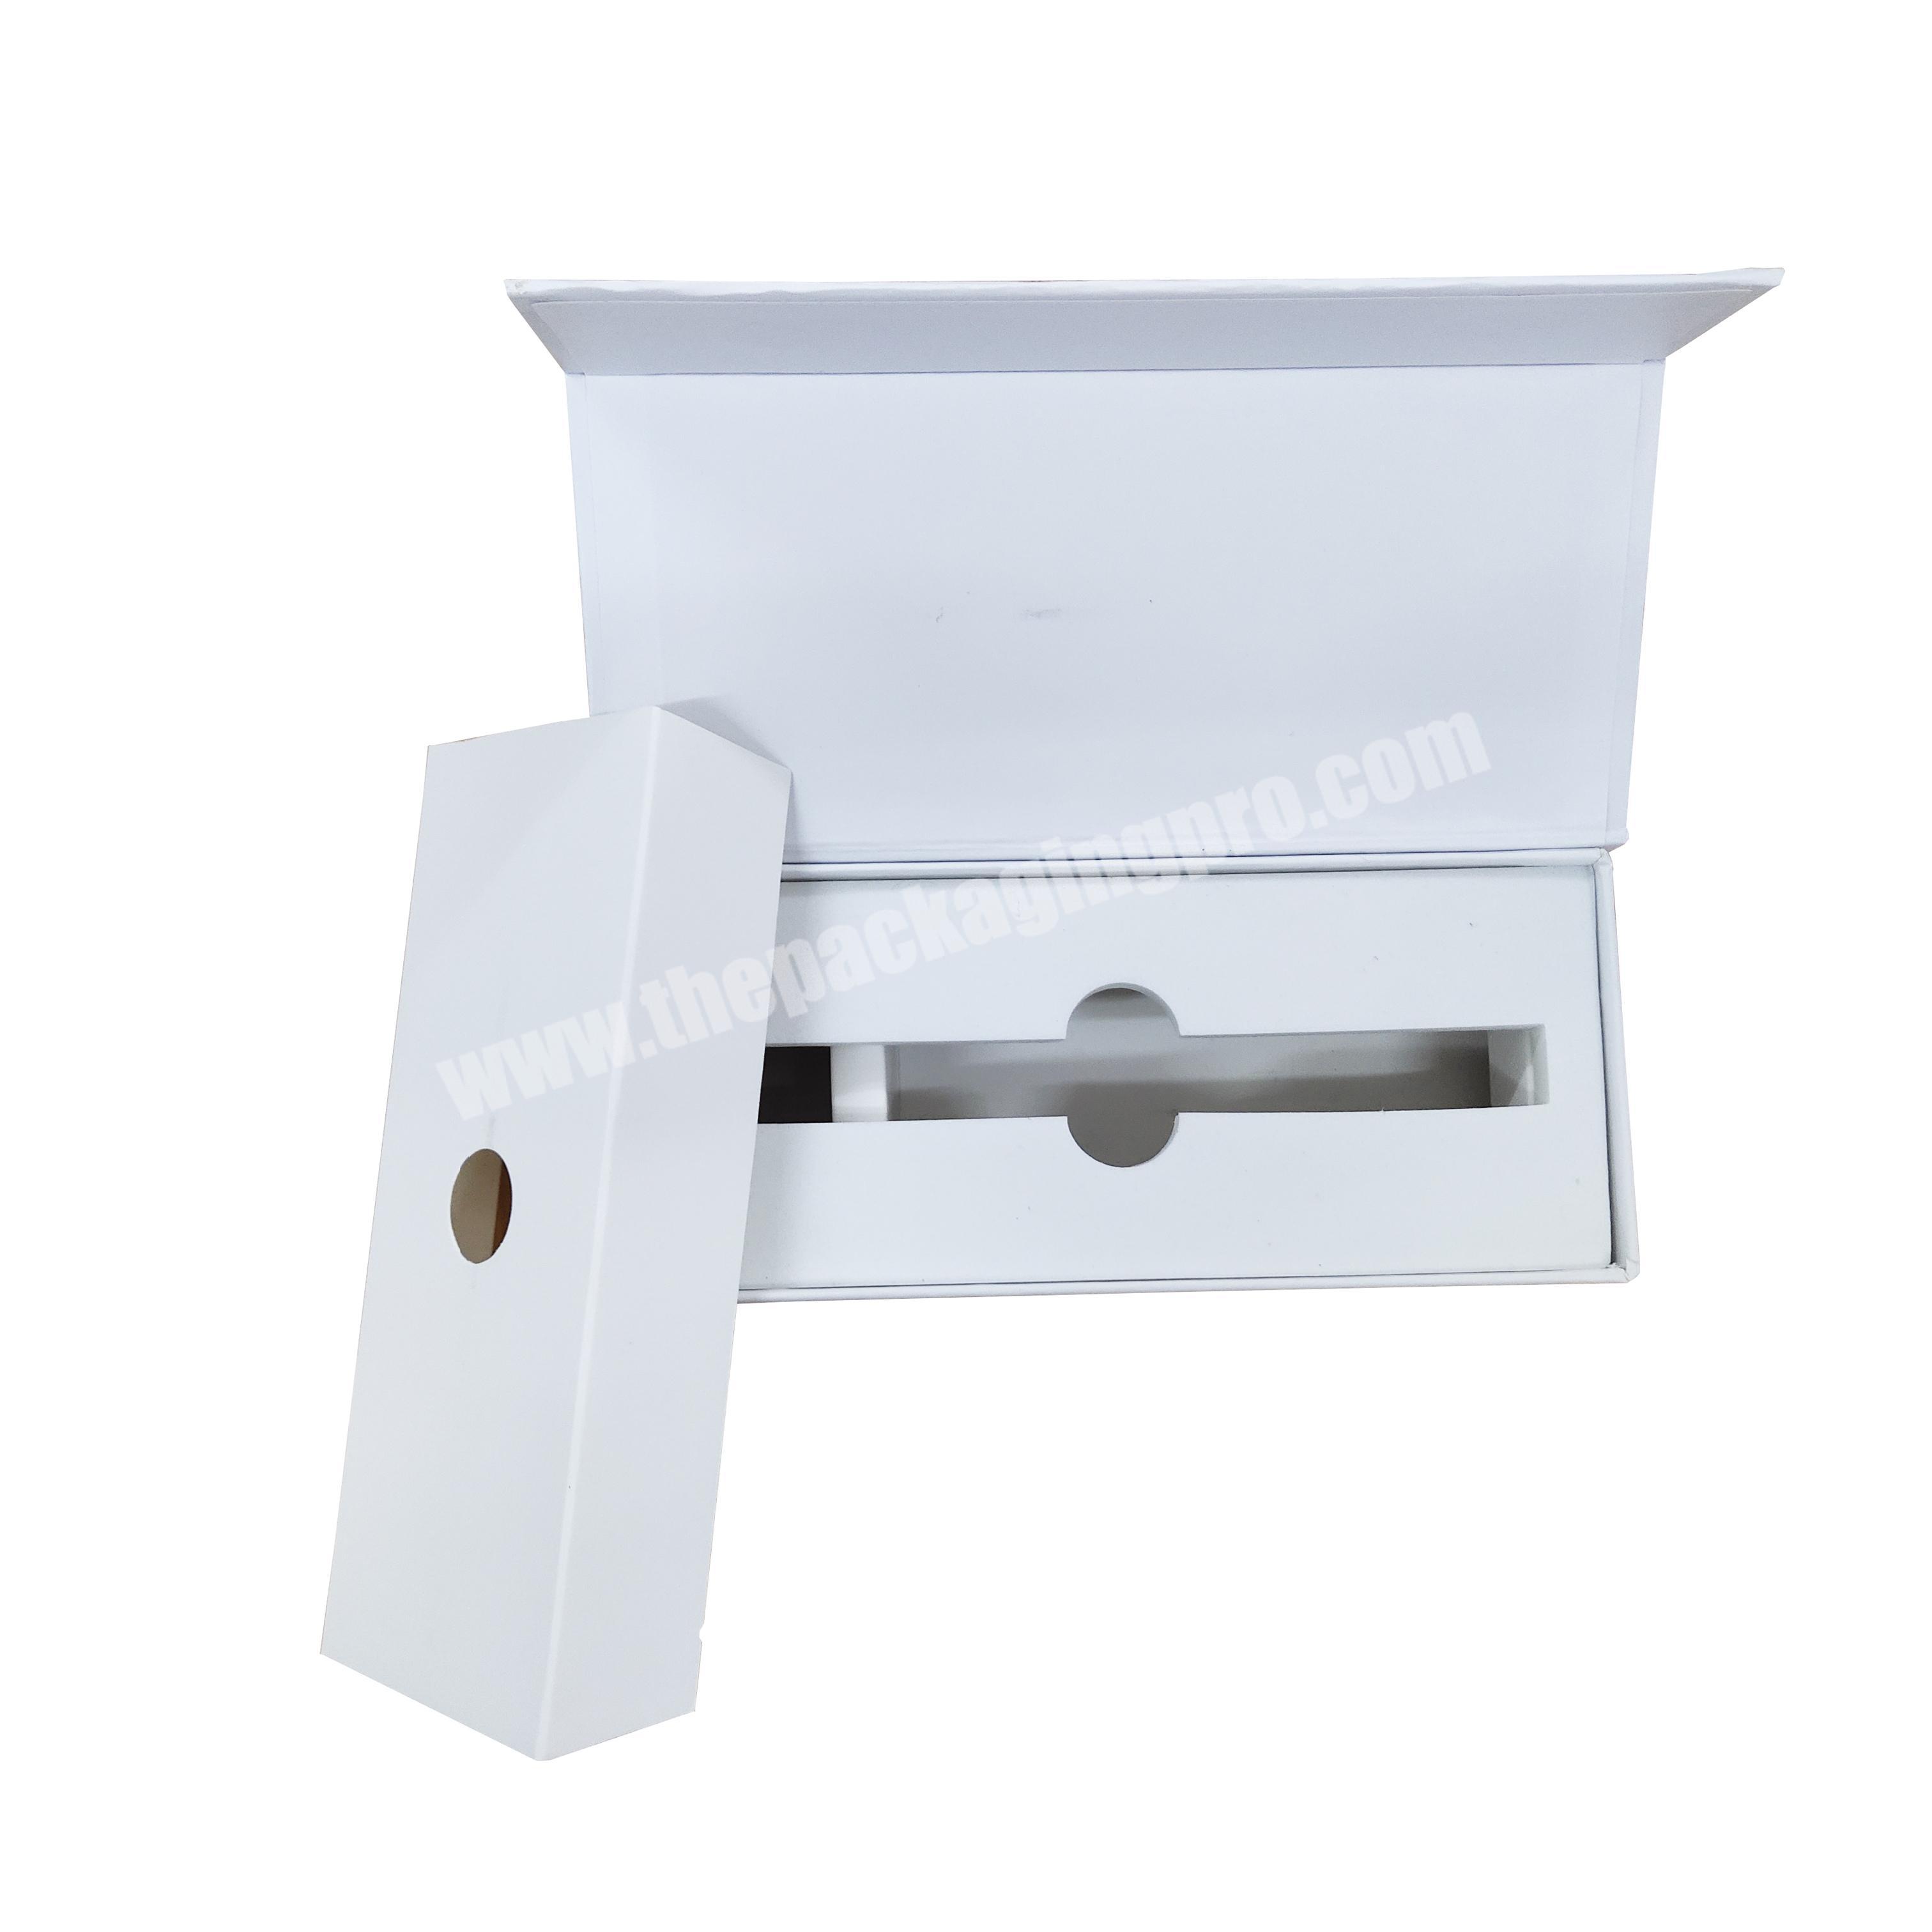 Factory customized personaliser e-cigarette box packaging luxury electronics cigarette paper box